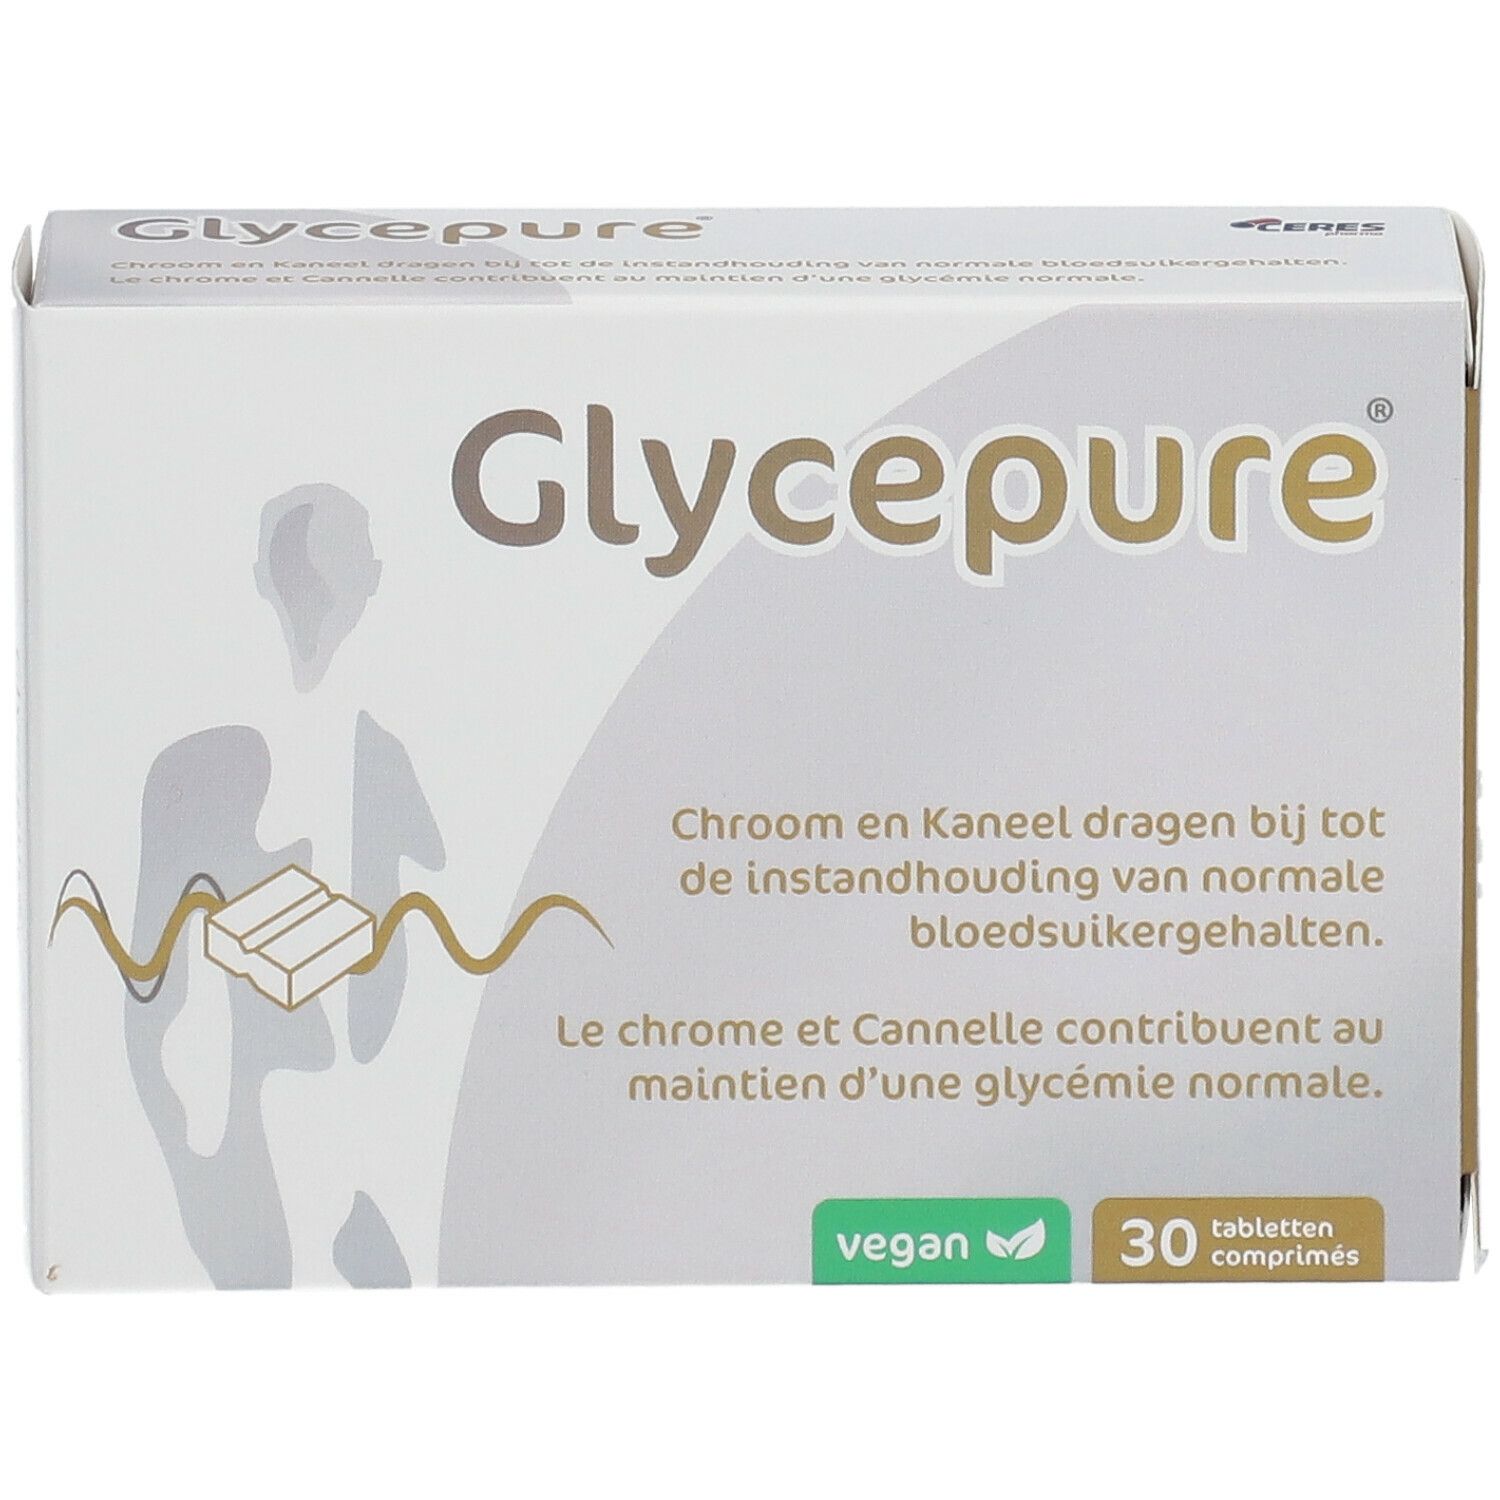 GlycePure®